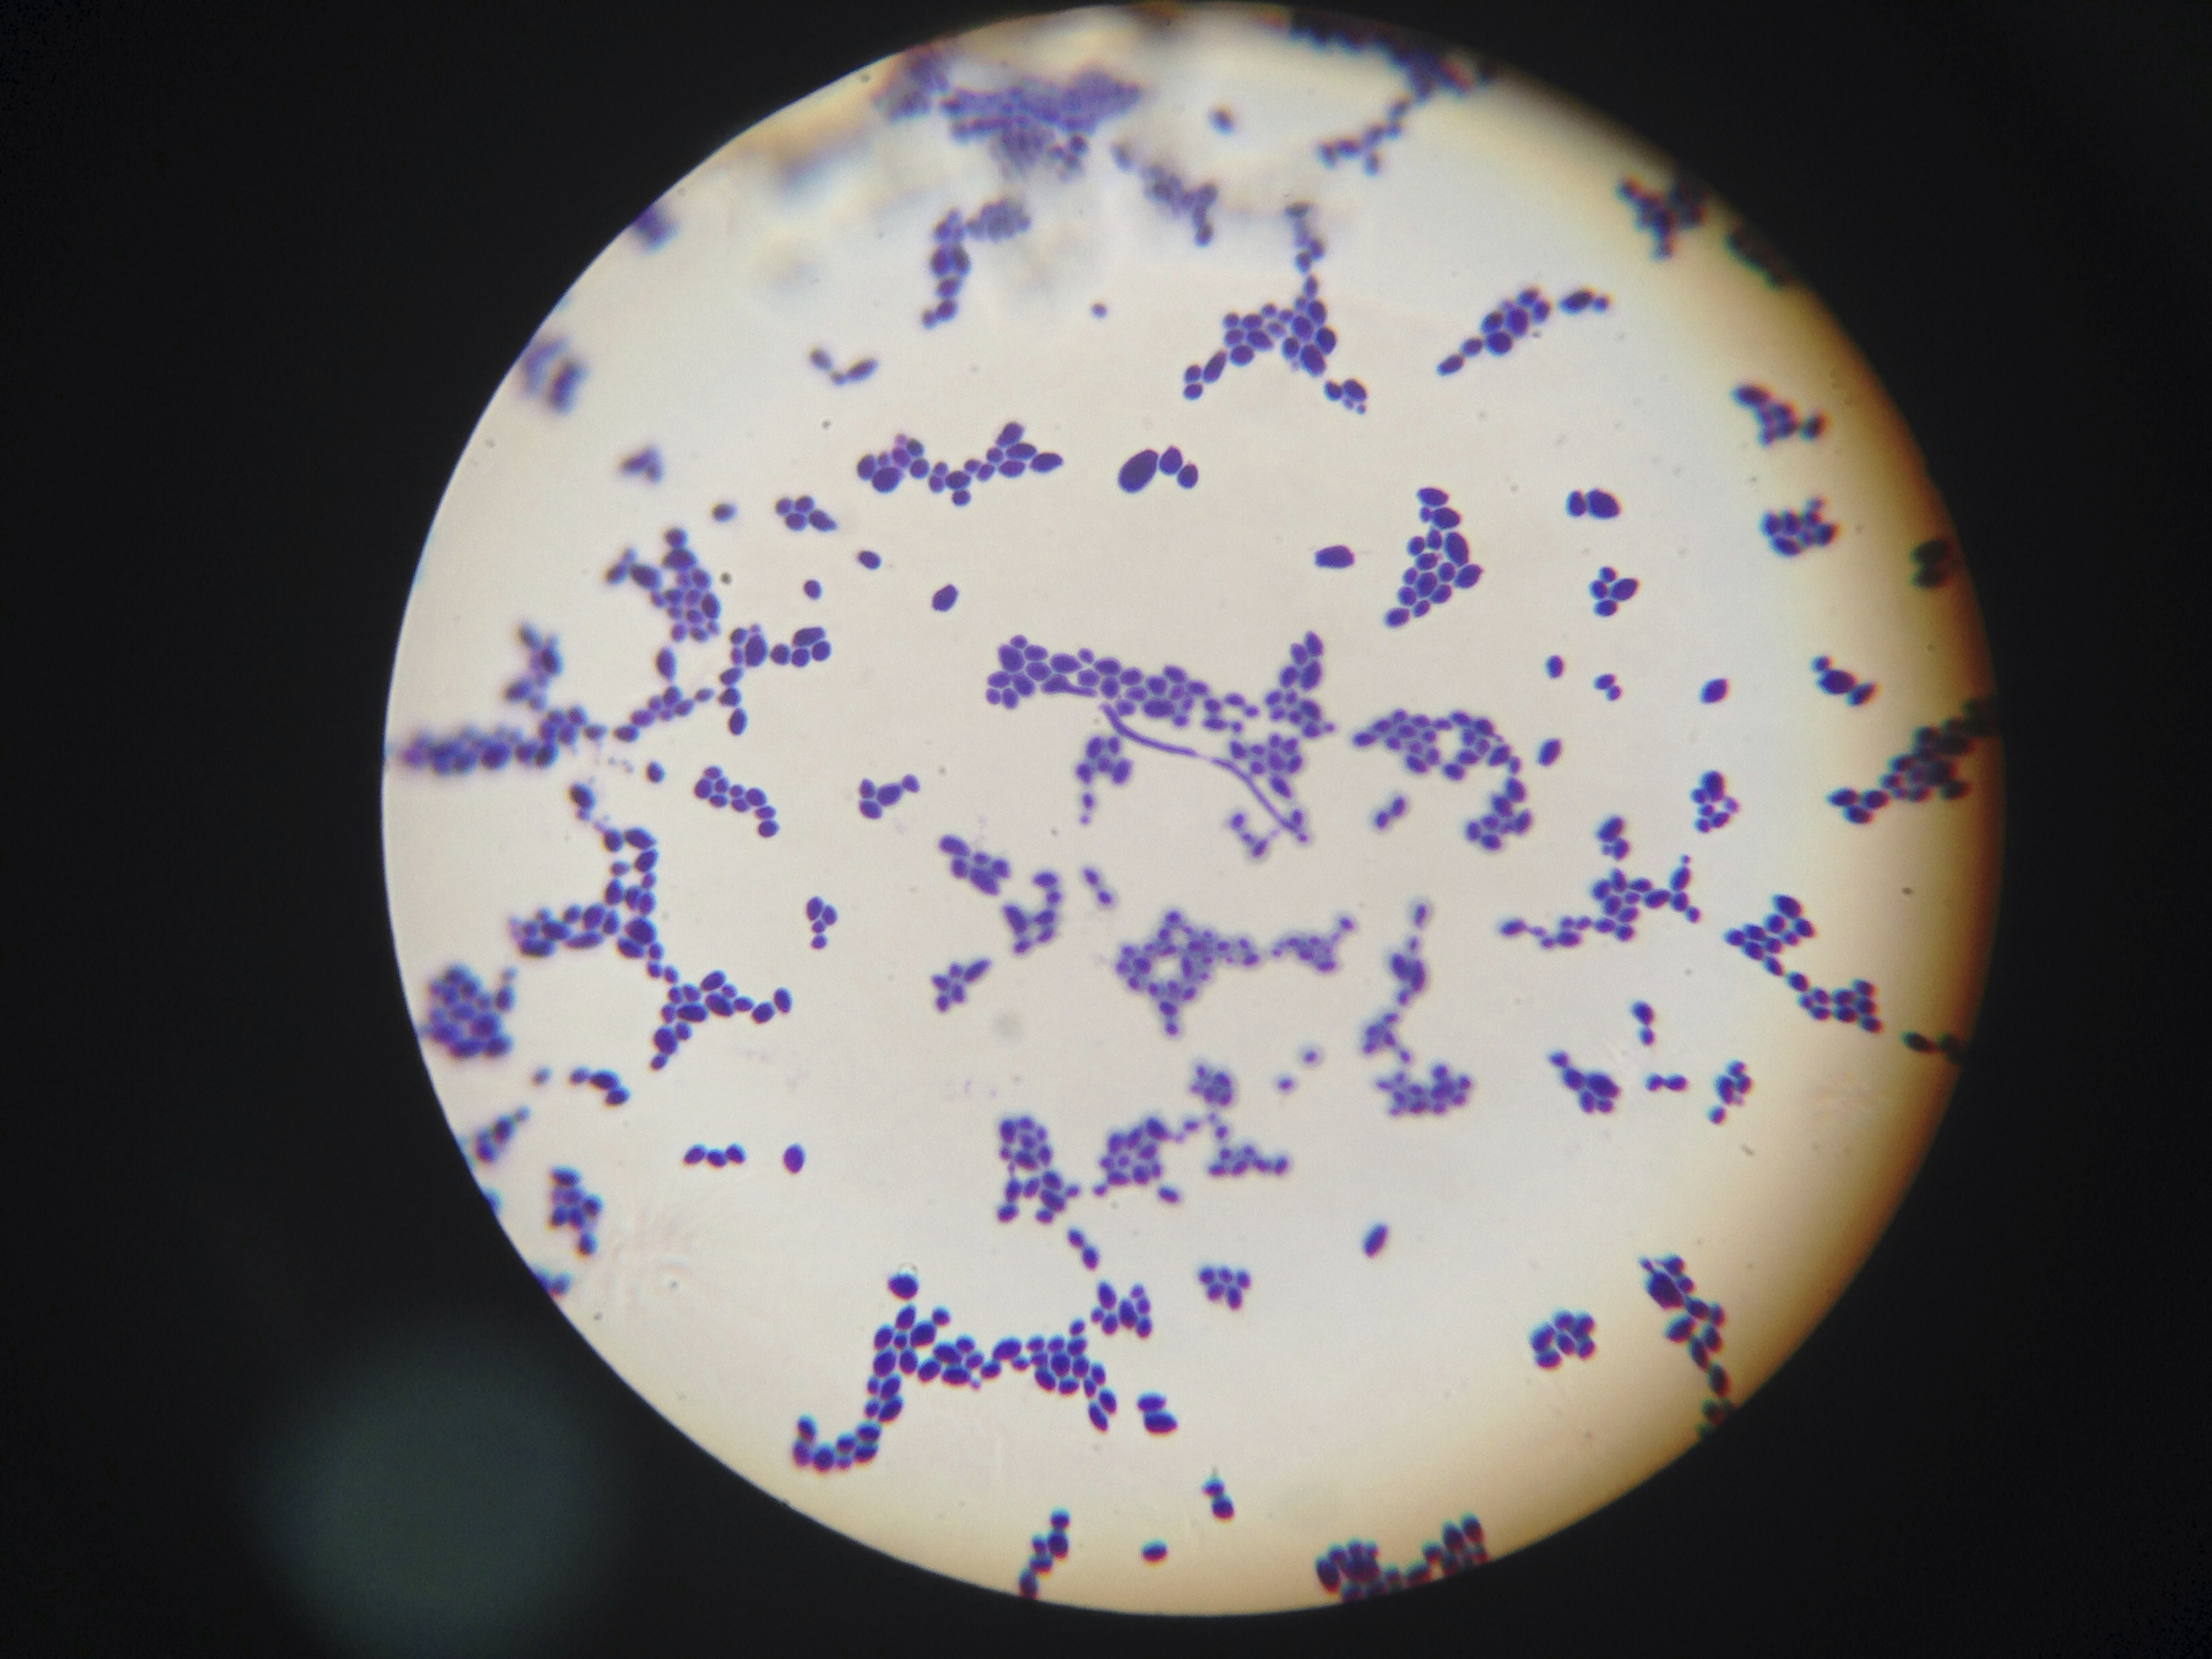 Дрожжеподобные грибы candida. Кандида альбиканс микроскопия. Кандида альбиканс под микроскопом. Грибы кандида микроскопия мазка.